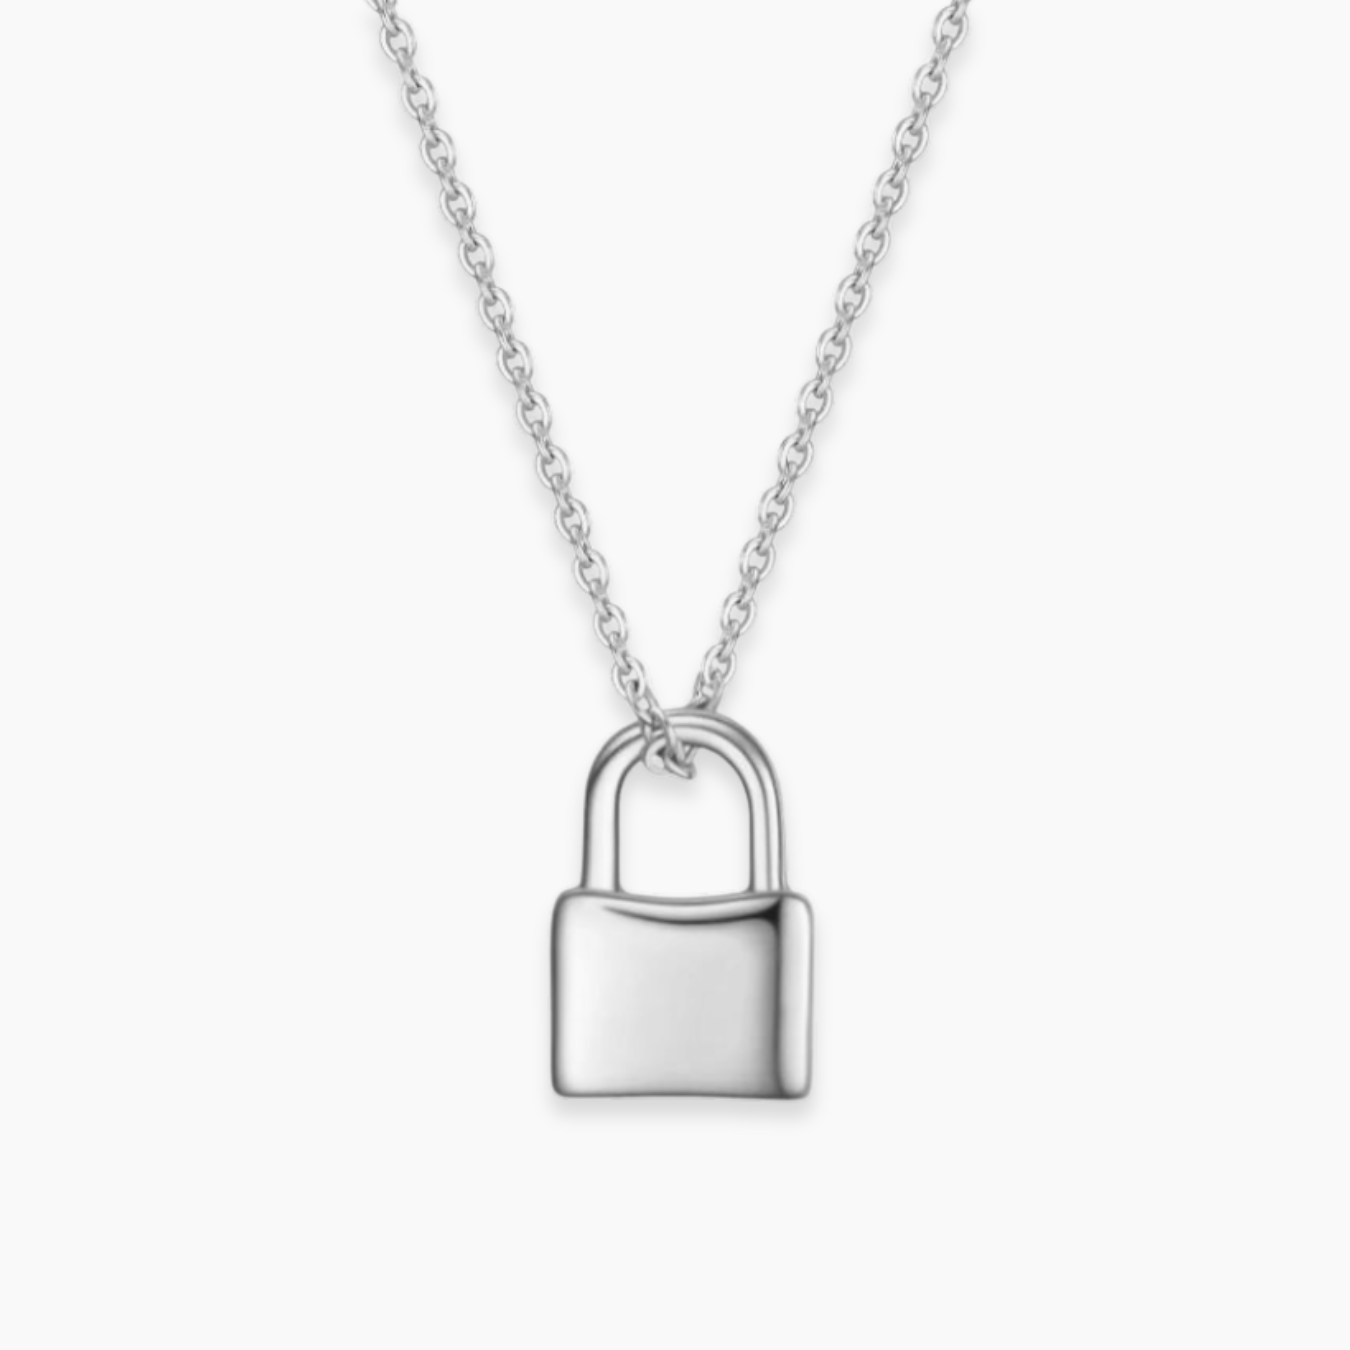 LOCK Personalizable Necklace | Coordinates